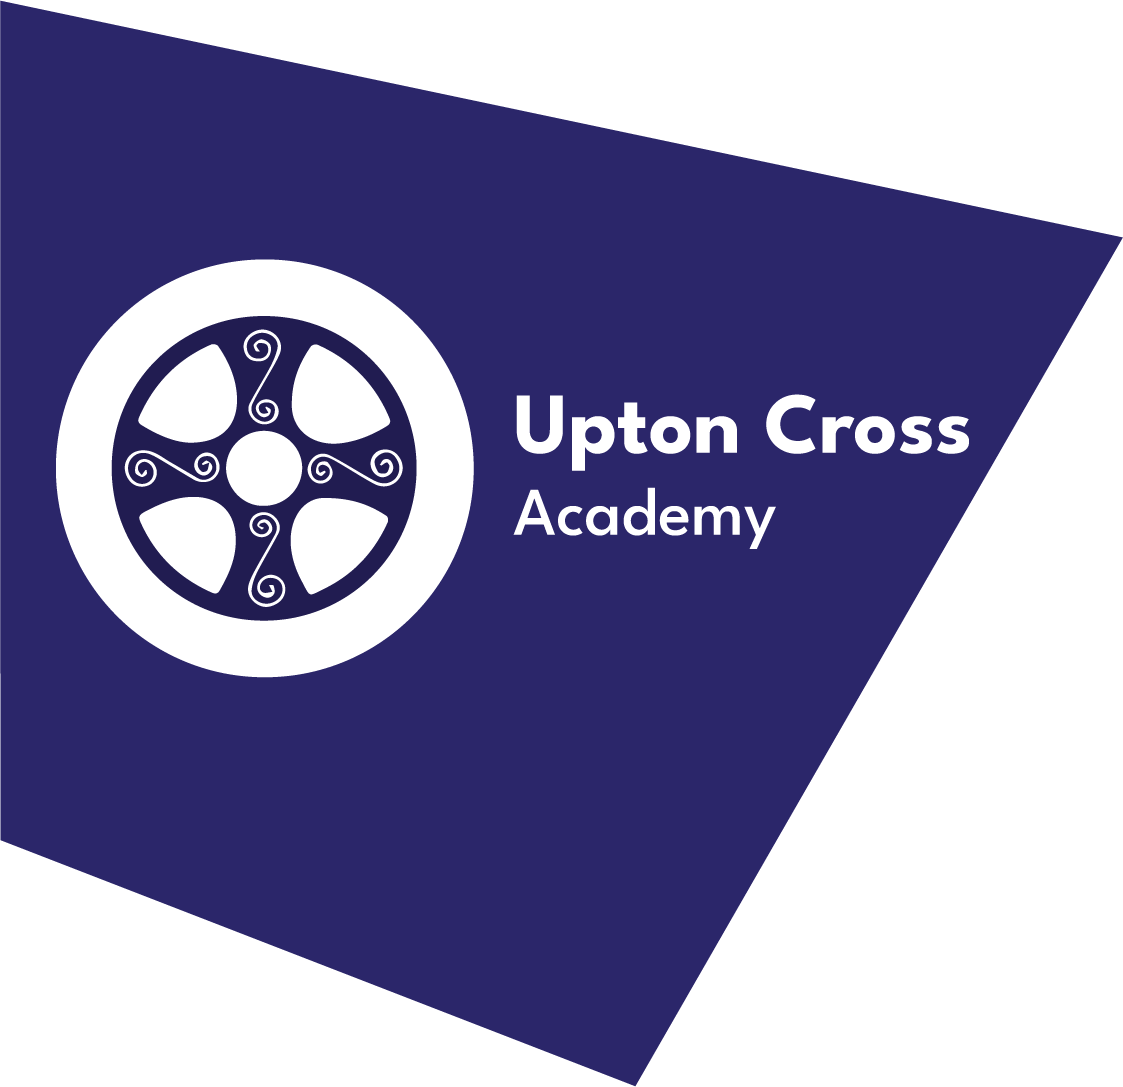 Upton Cross Academy logo